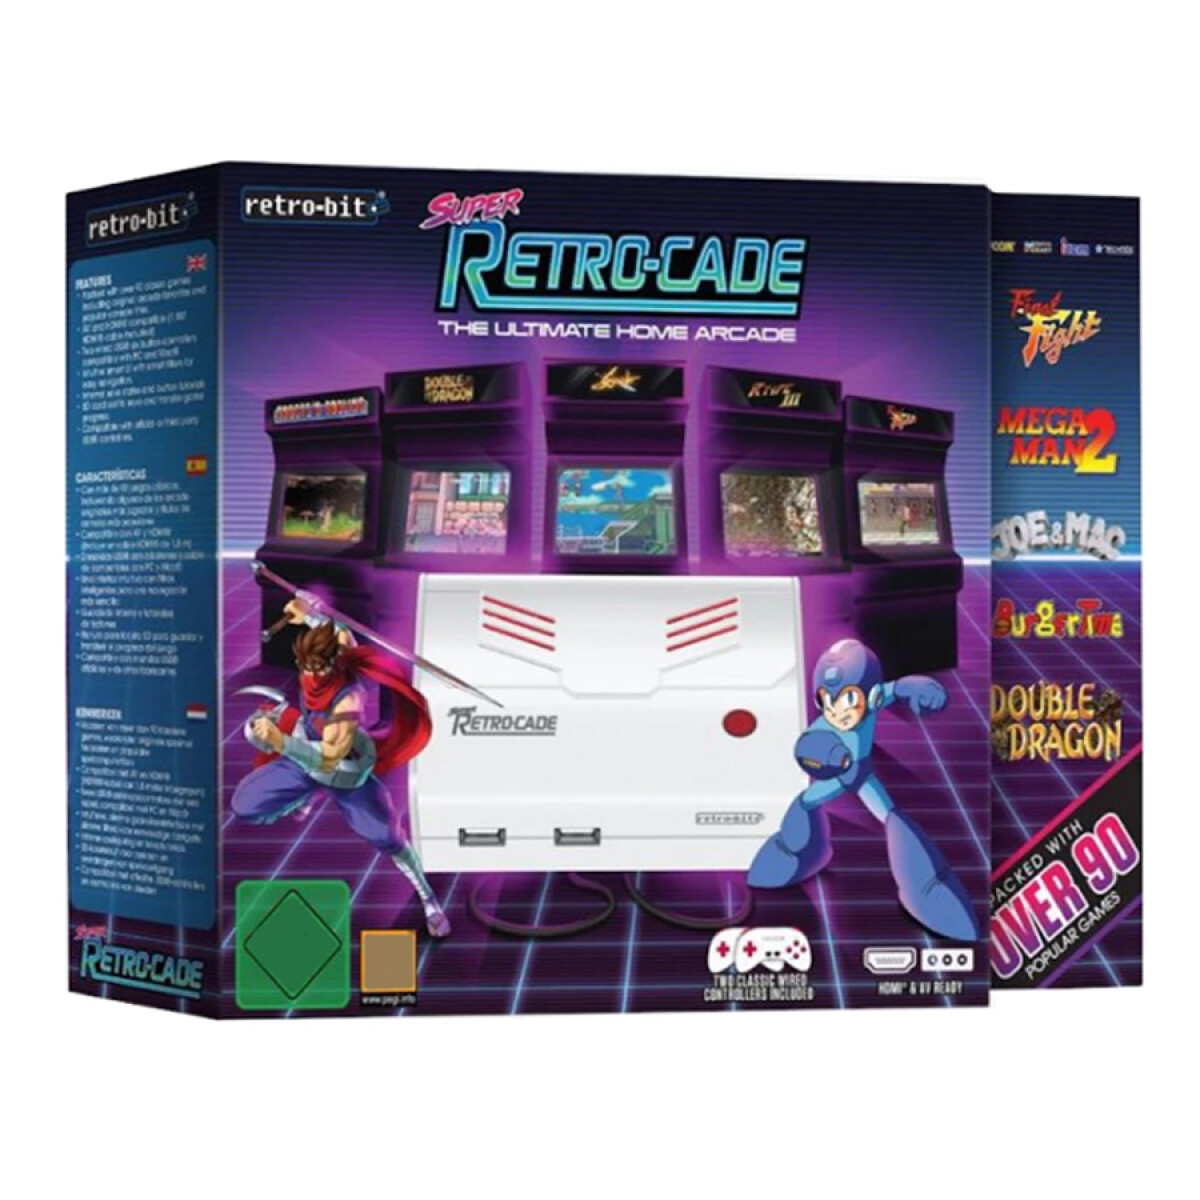 Super Retro-Cade - Arcade retro-bit 